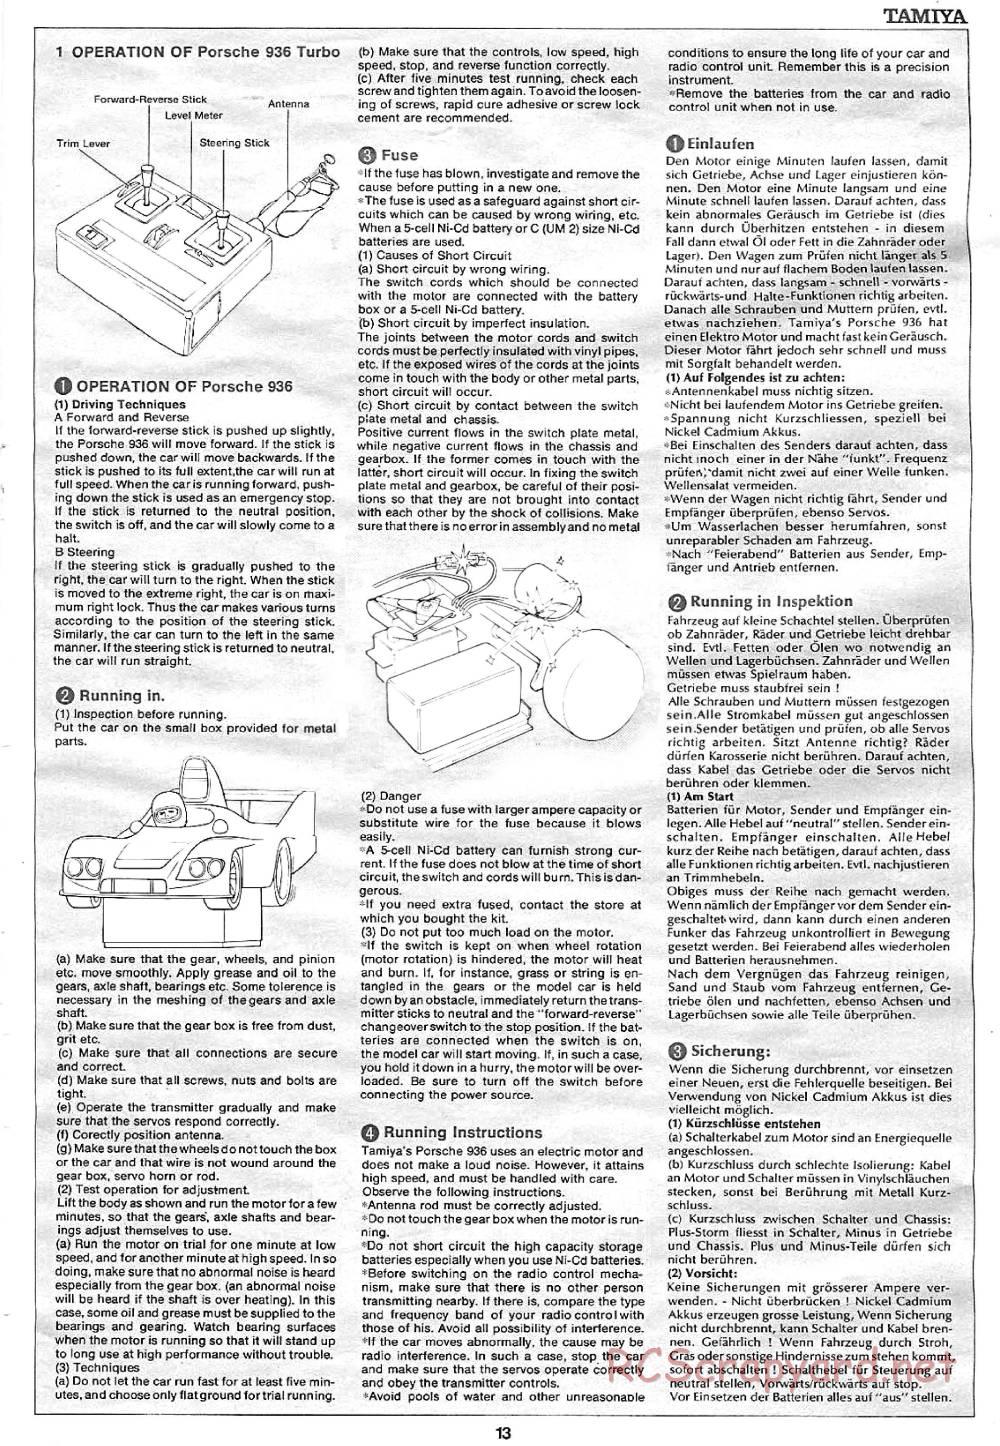 Tamiya - Martini Porsche 936 Turbo - 58006 - Manual - Page 13